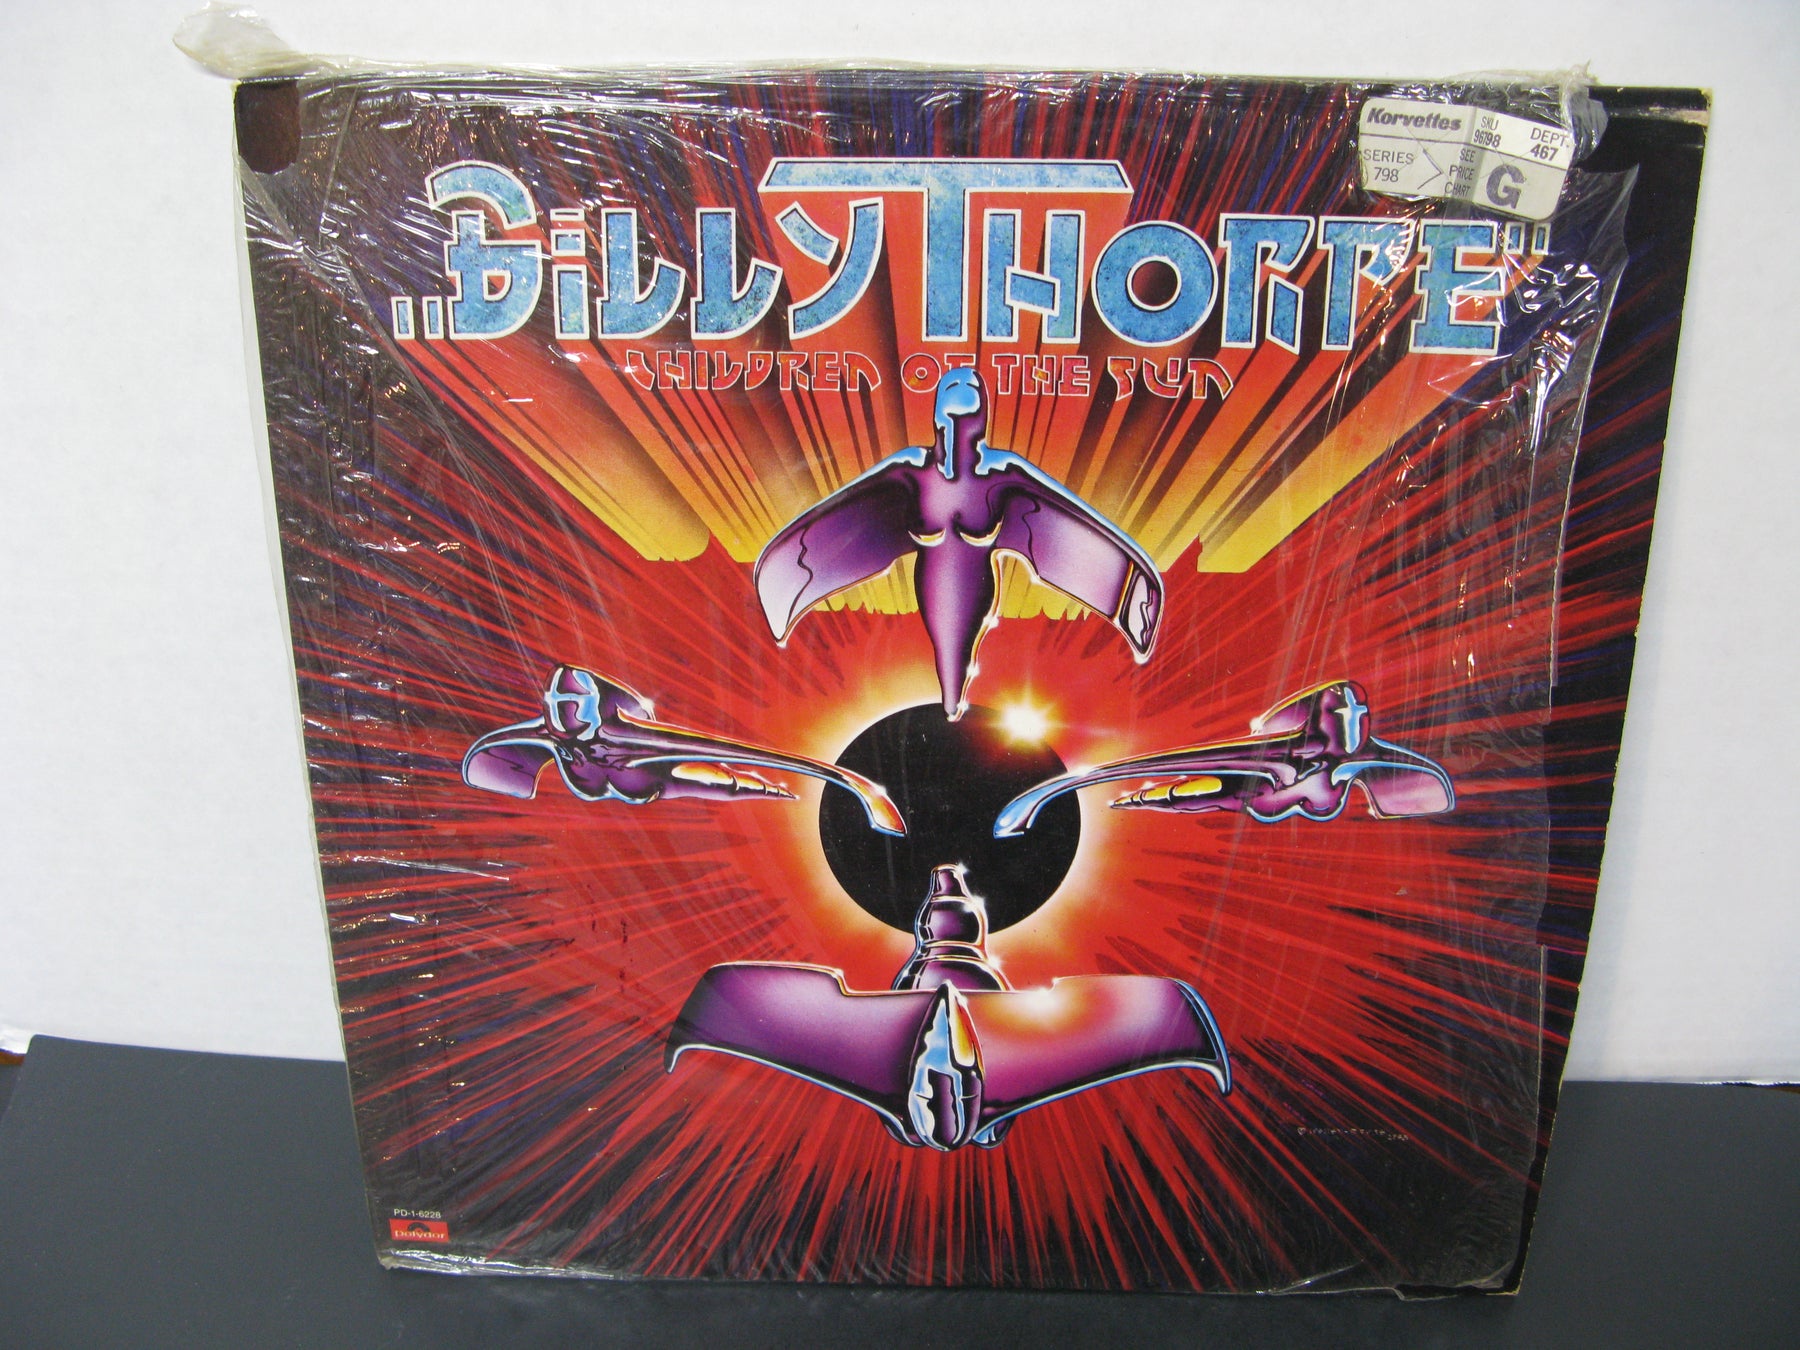 Billy Thorpe-Children of the Sun Vinyl Record